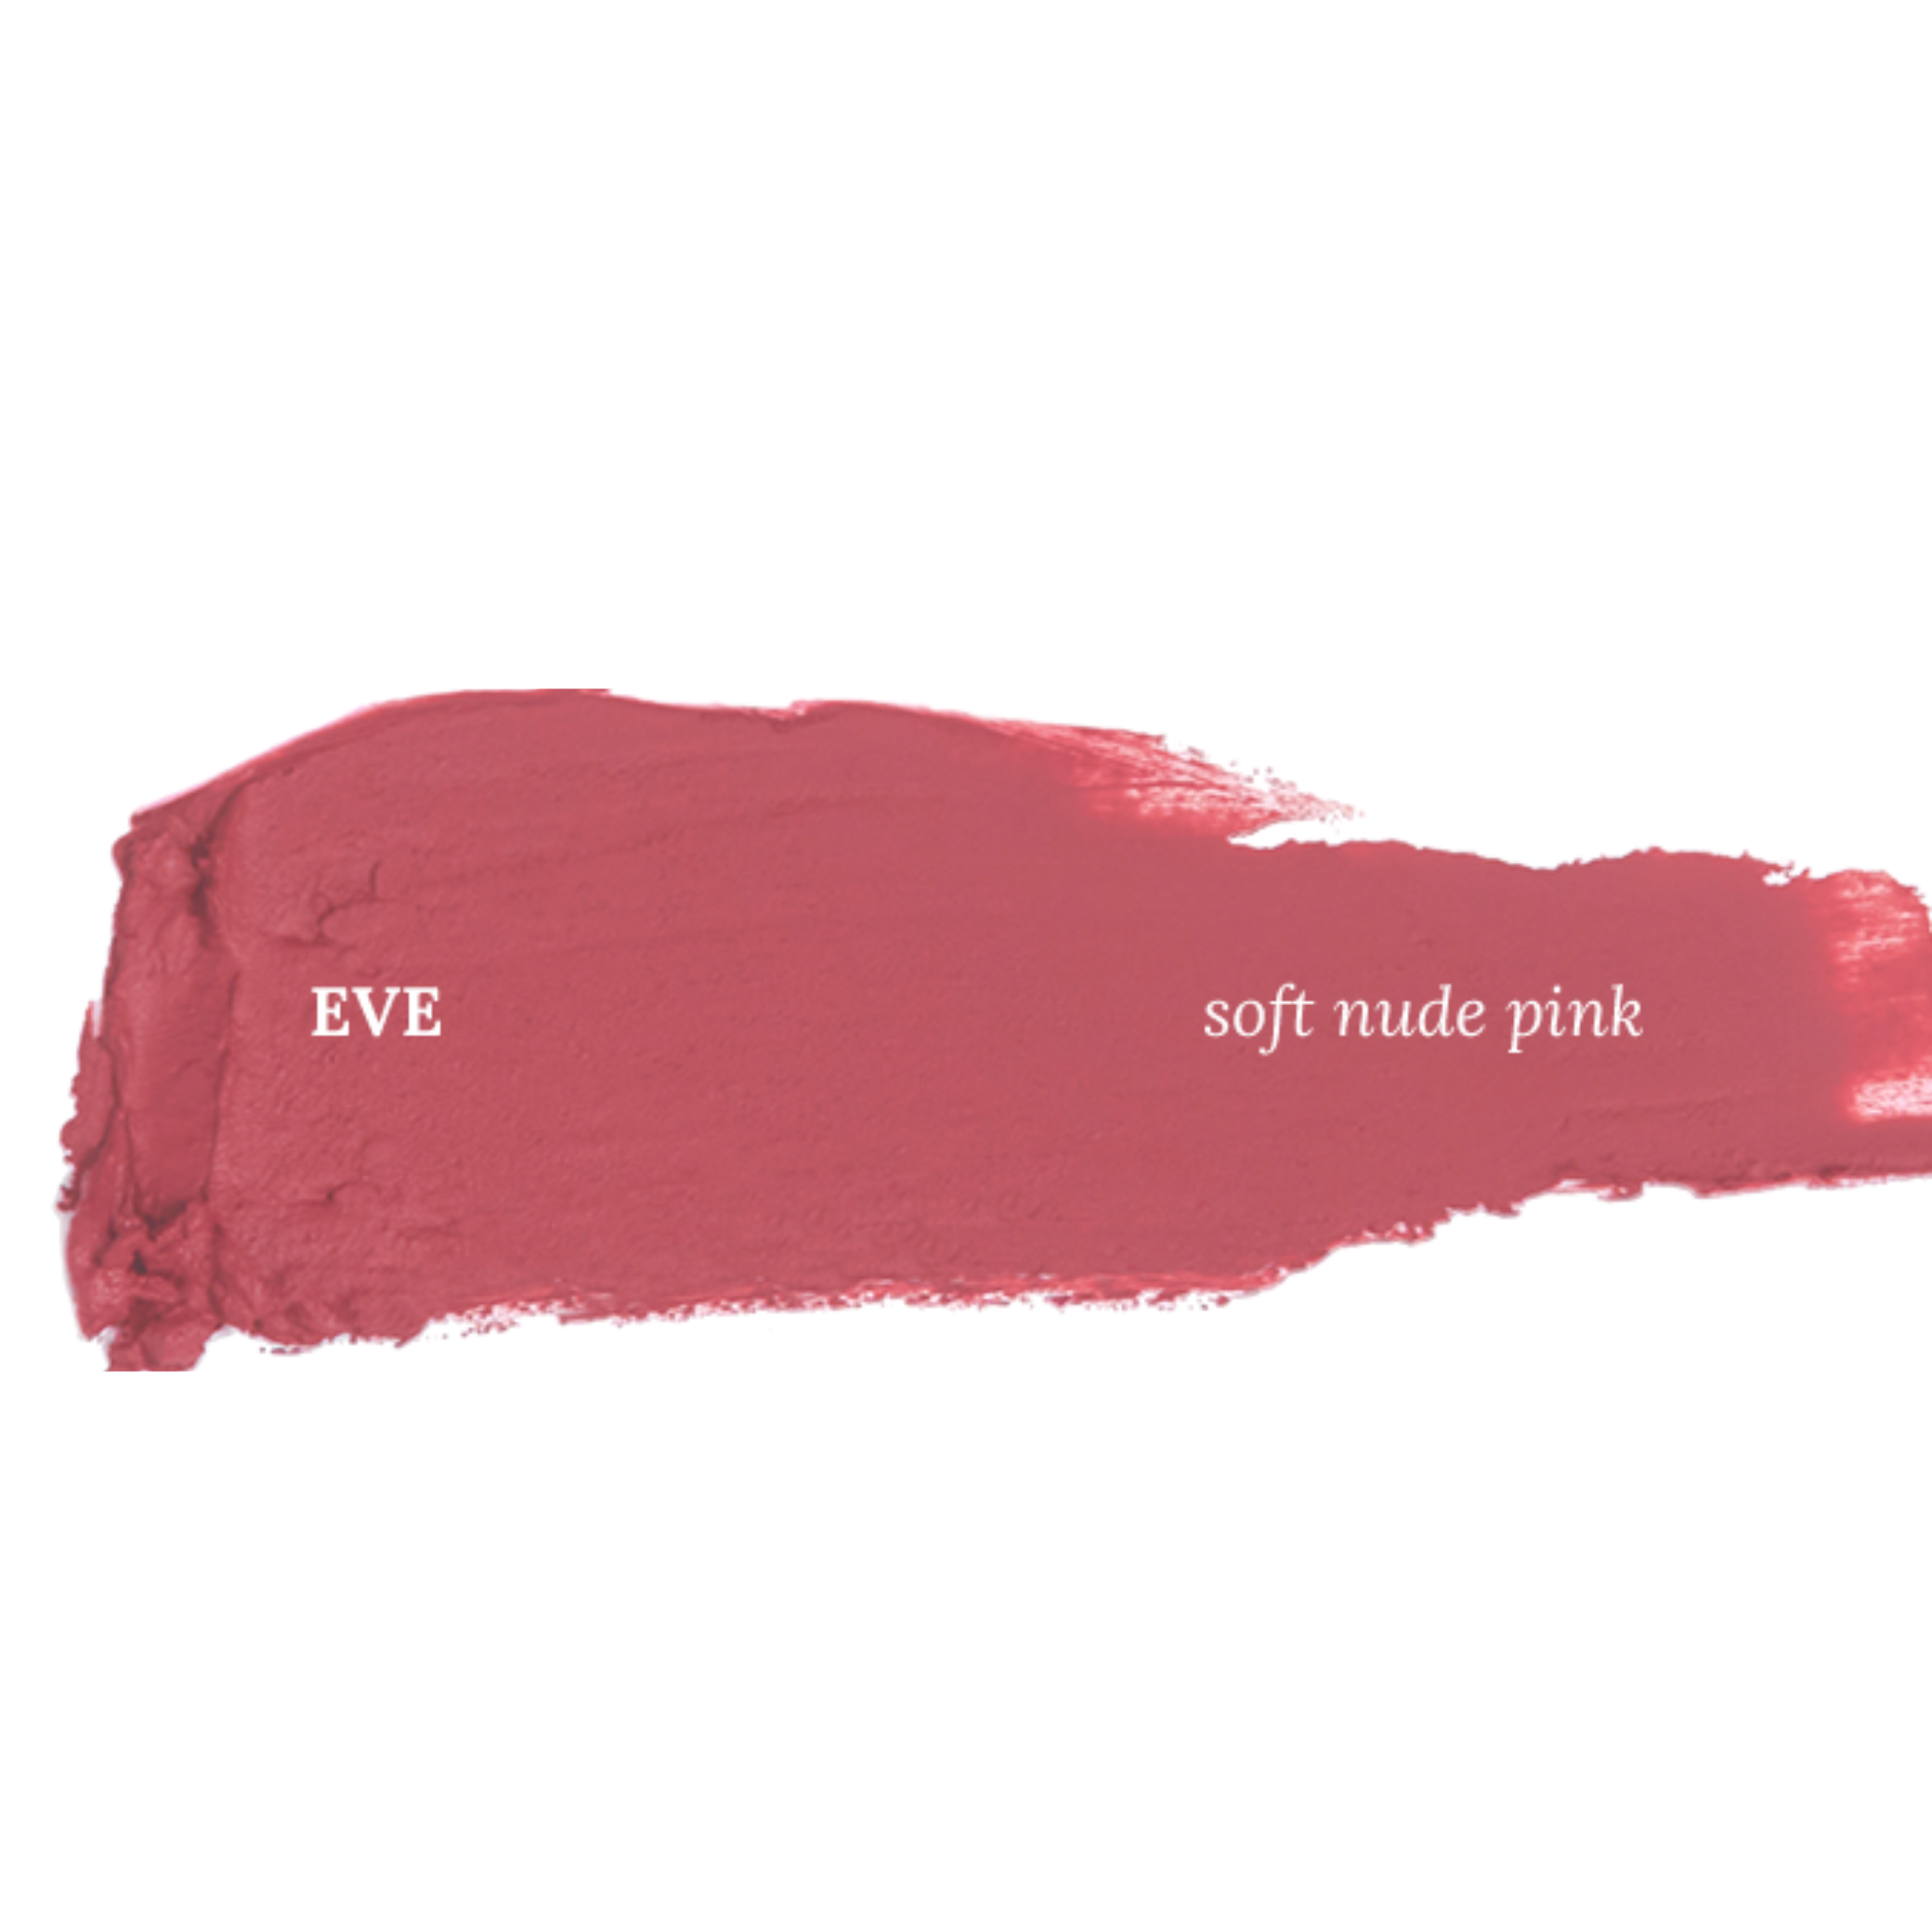 Rose carved lipstick - Eve